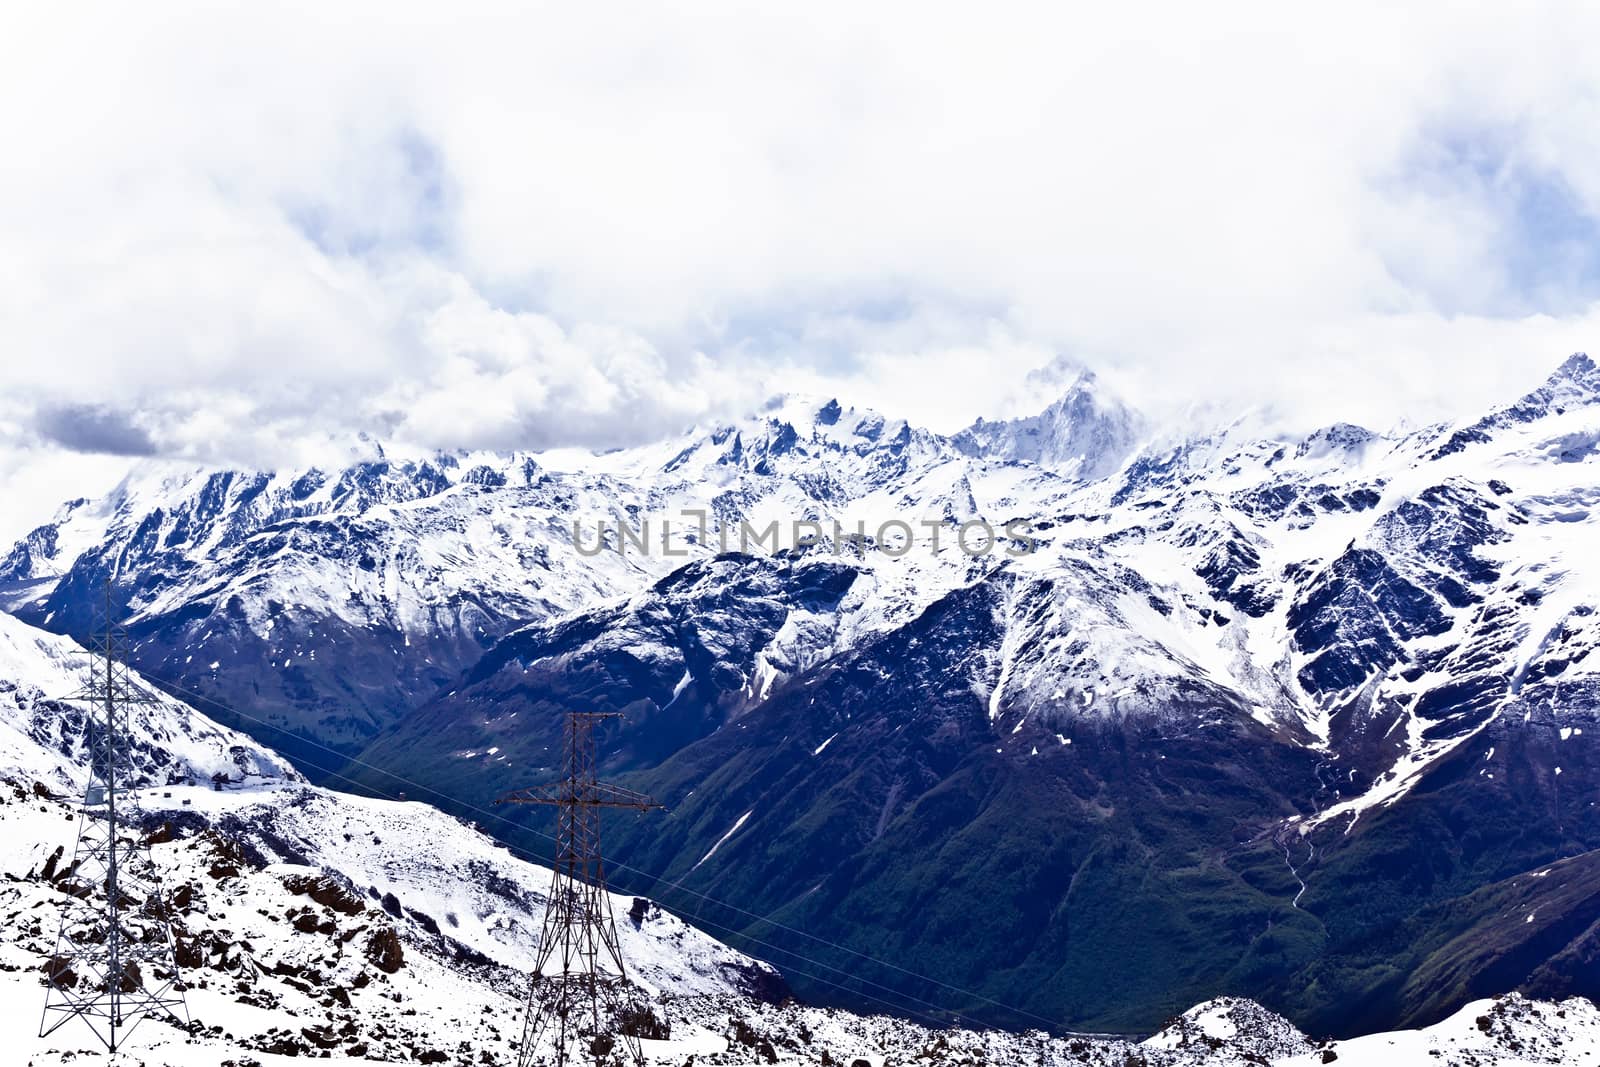 Caucasus mountains under fluffy snow by Julialine